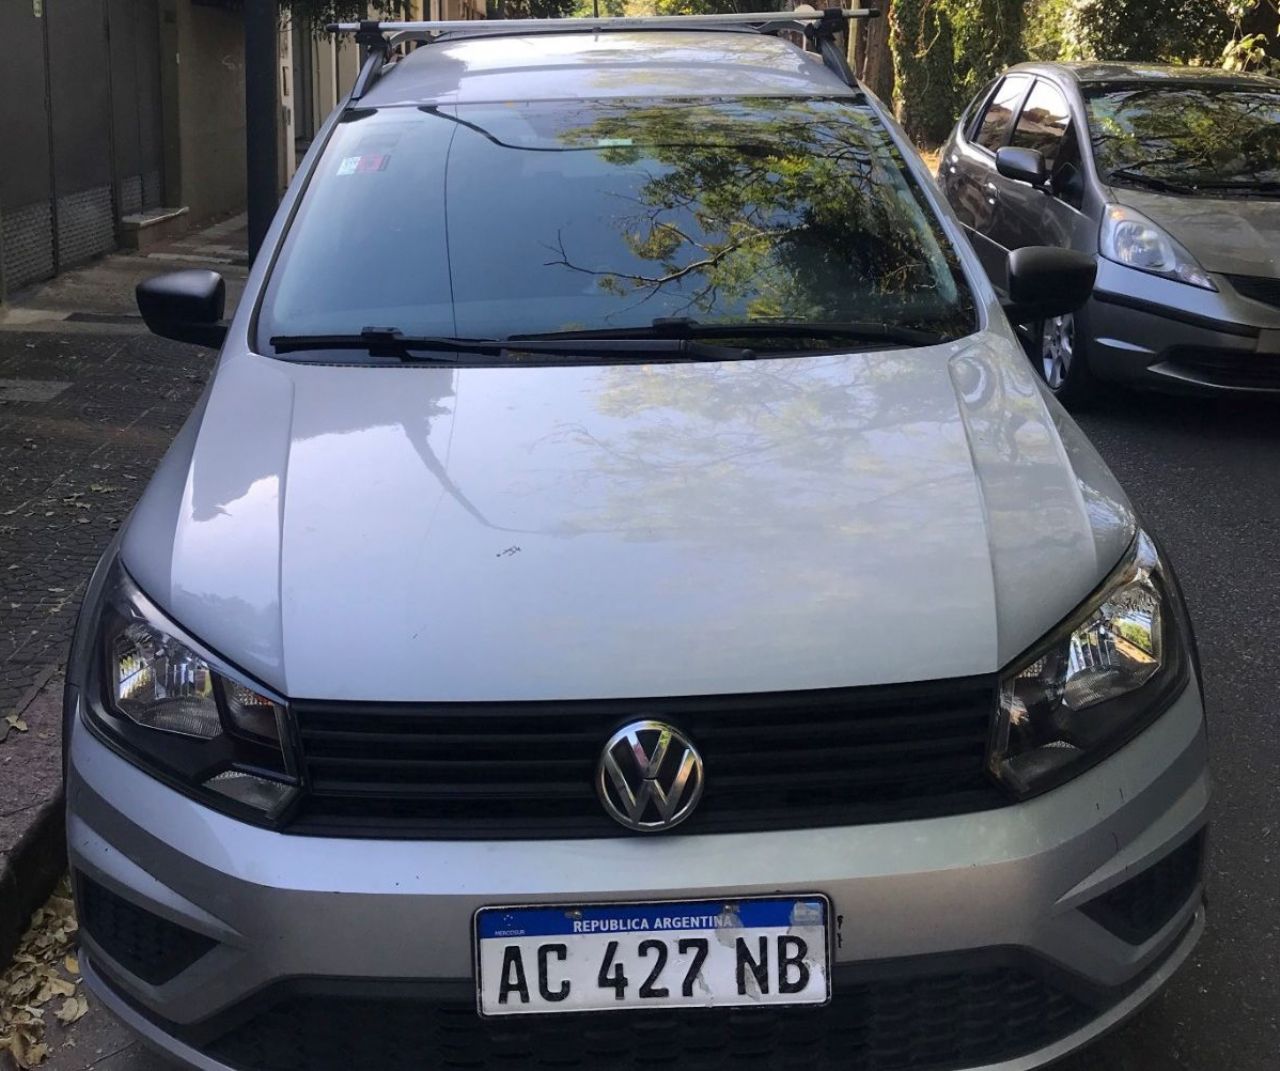 Volkswagen Saveiro Usada en Buenos Aires, deRuedas